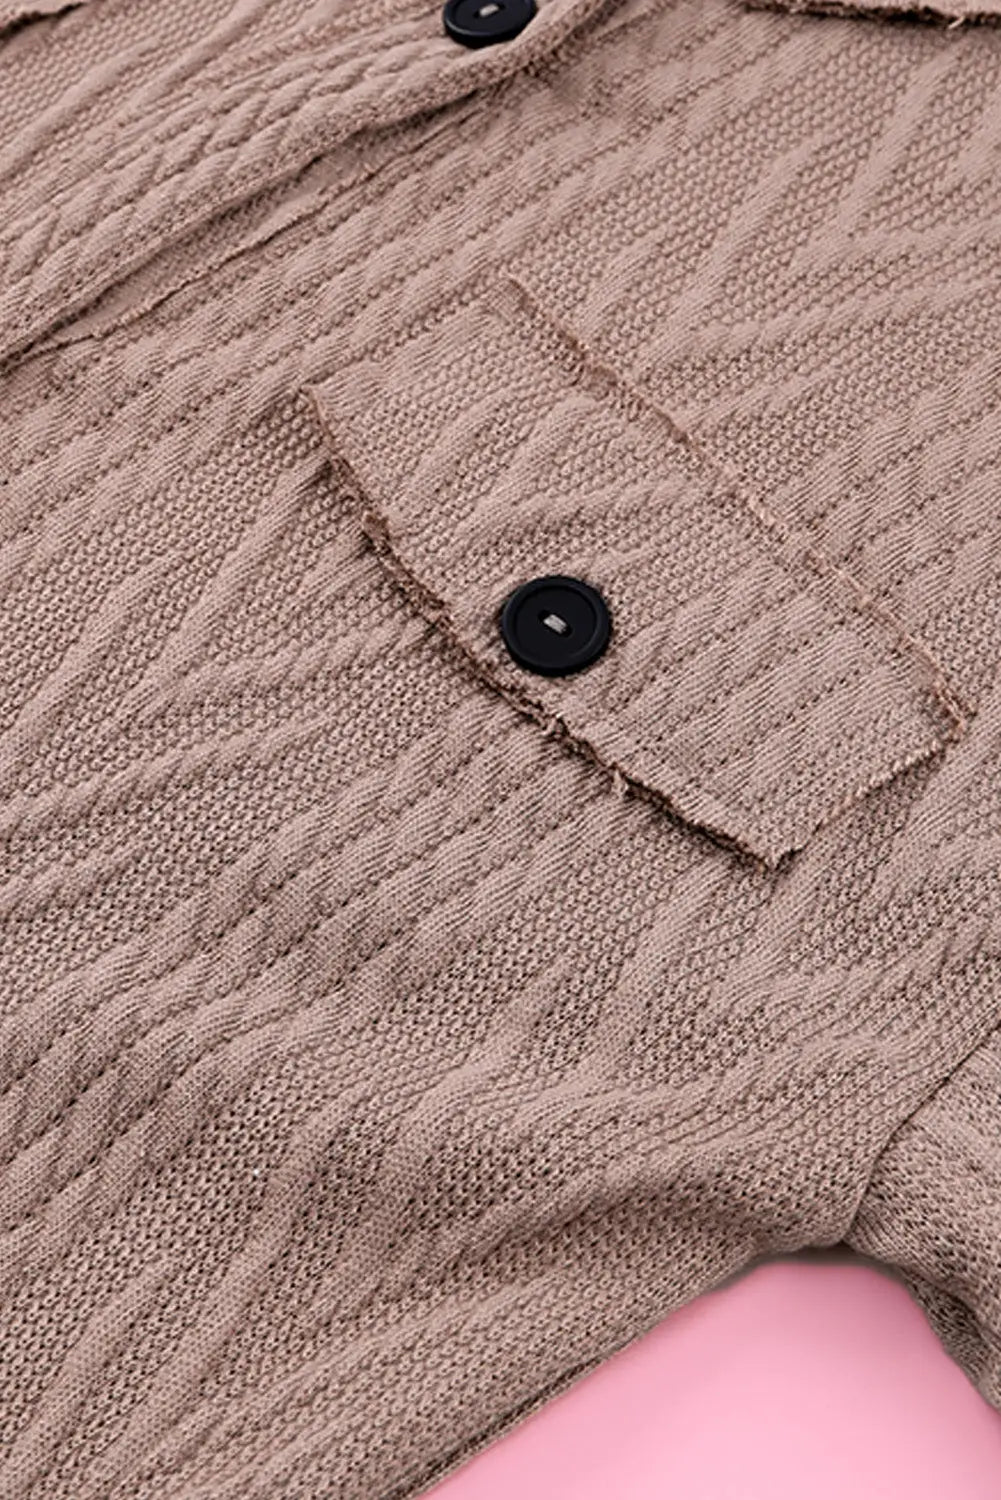 Khaki oversize textured knit button front shacket - shackets